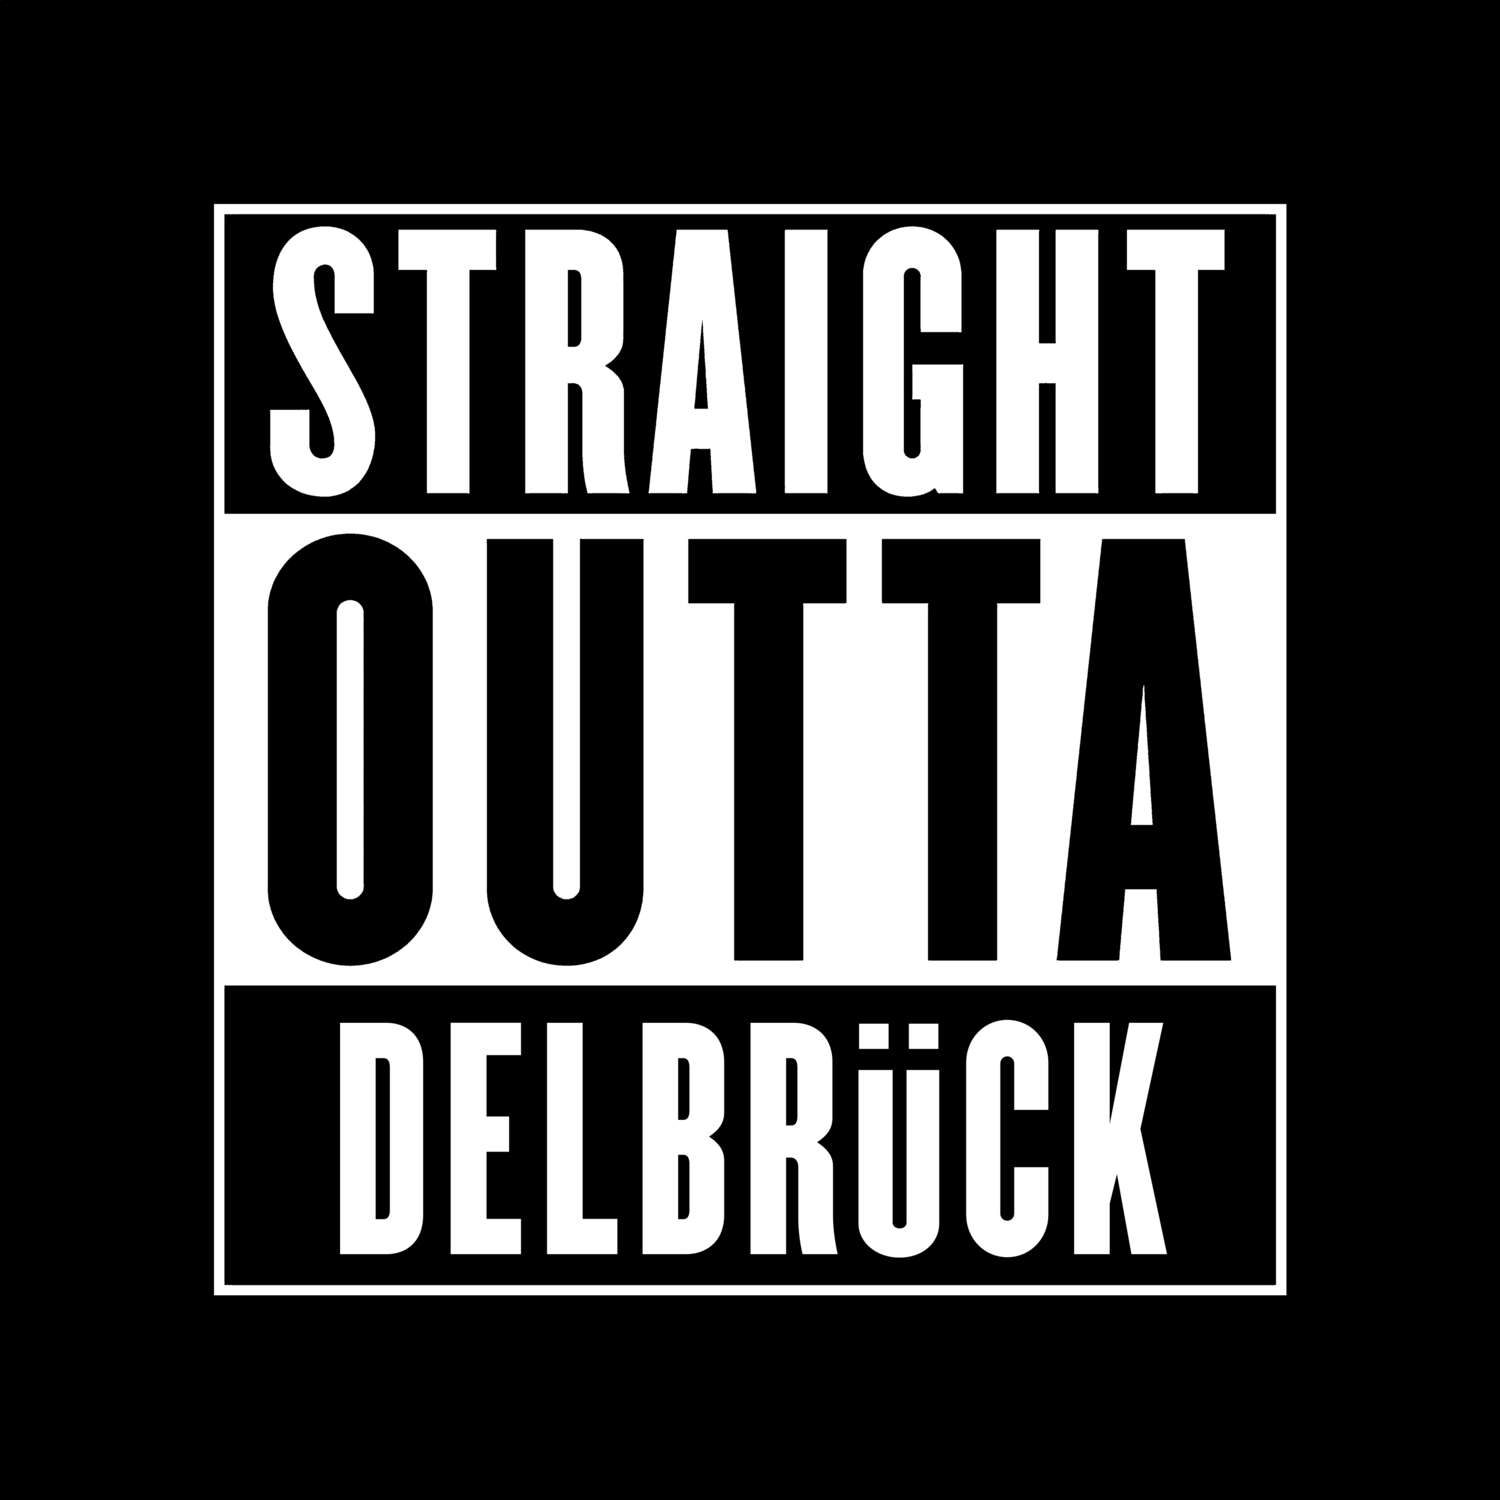 Delbrück T-Shirt »Straight Outta«